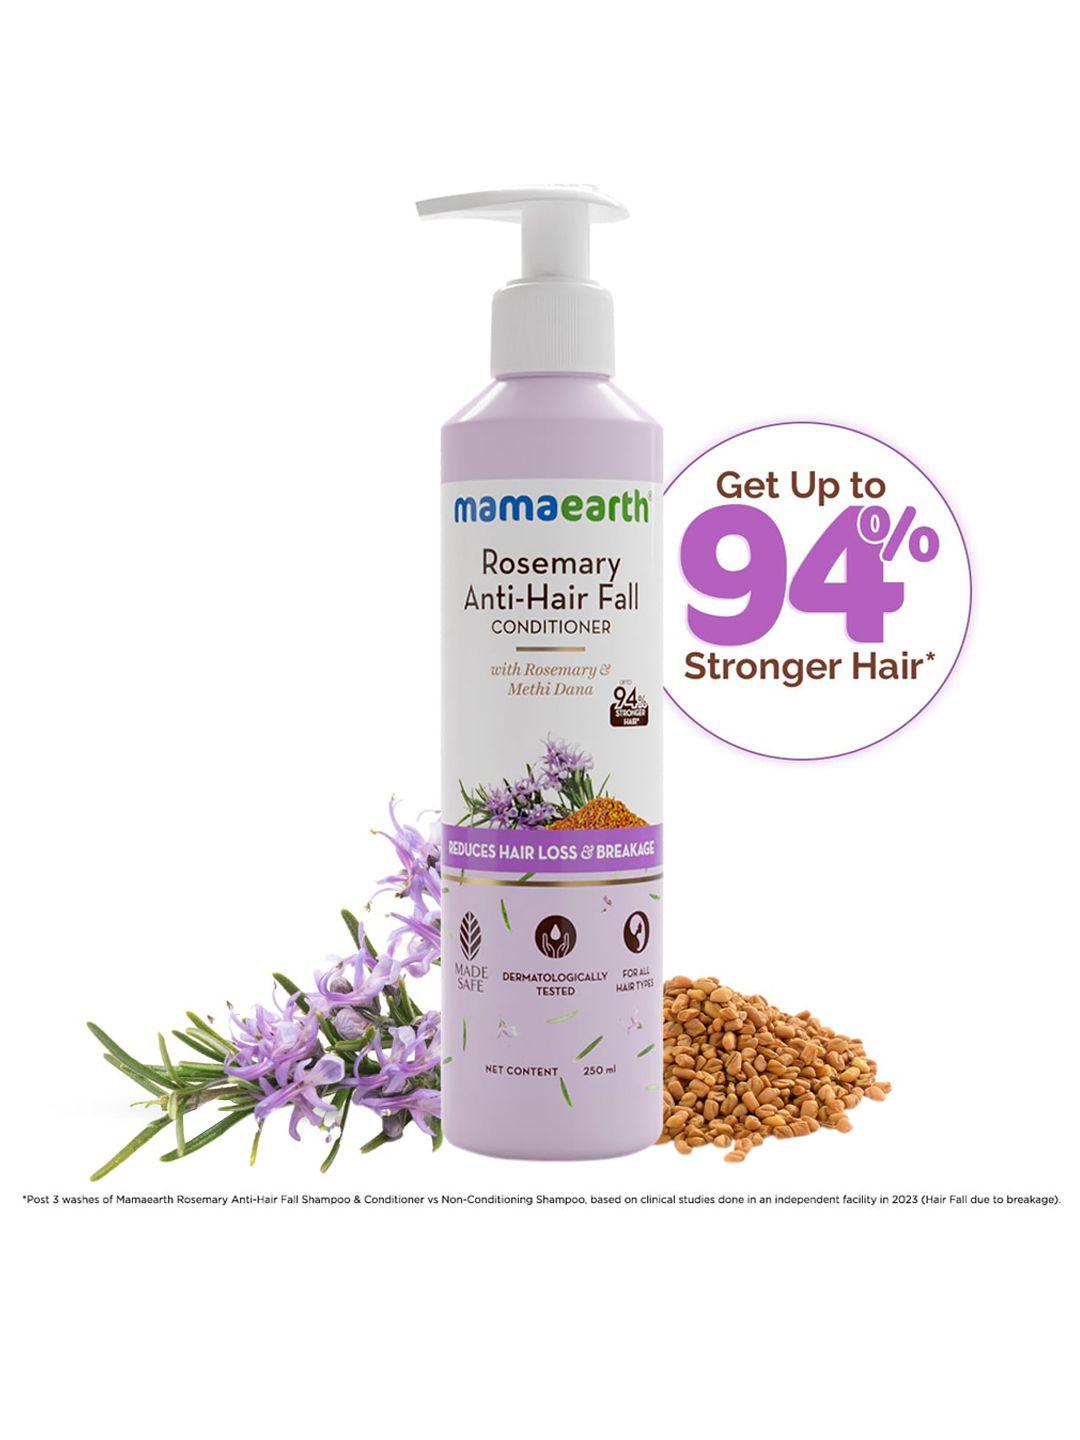 mamaearth rosemary anti-hair fall conditioner for reducing hair loss & breakage - 250 ml